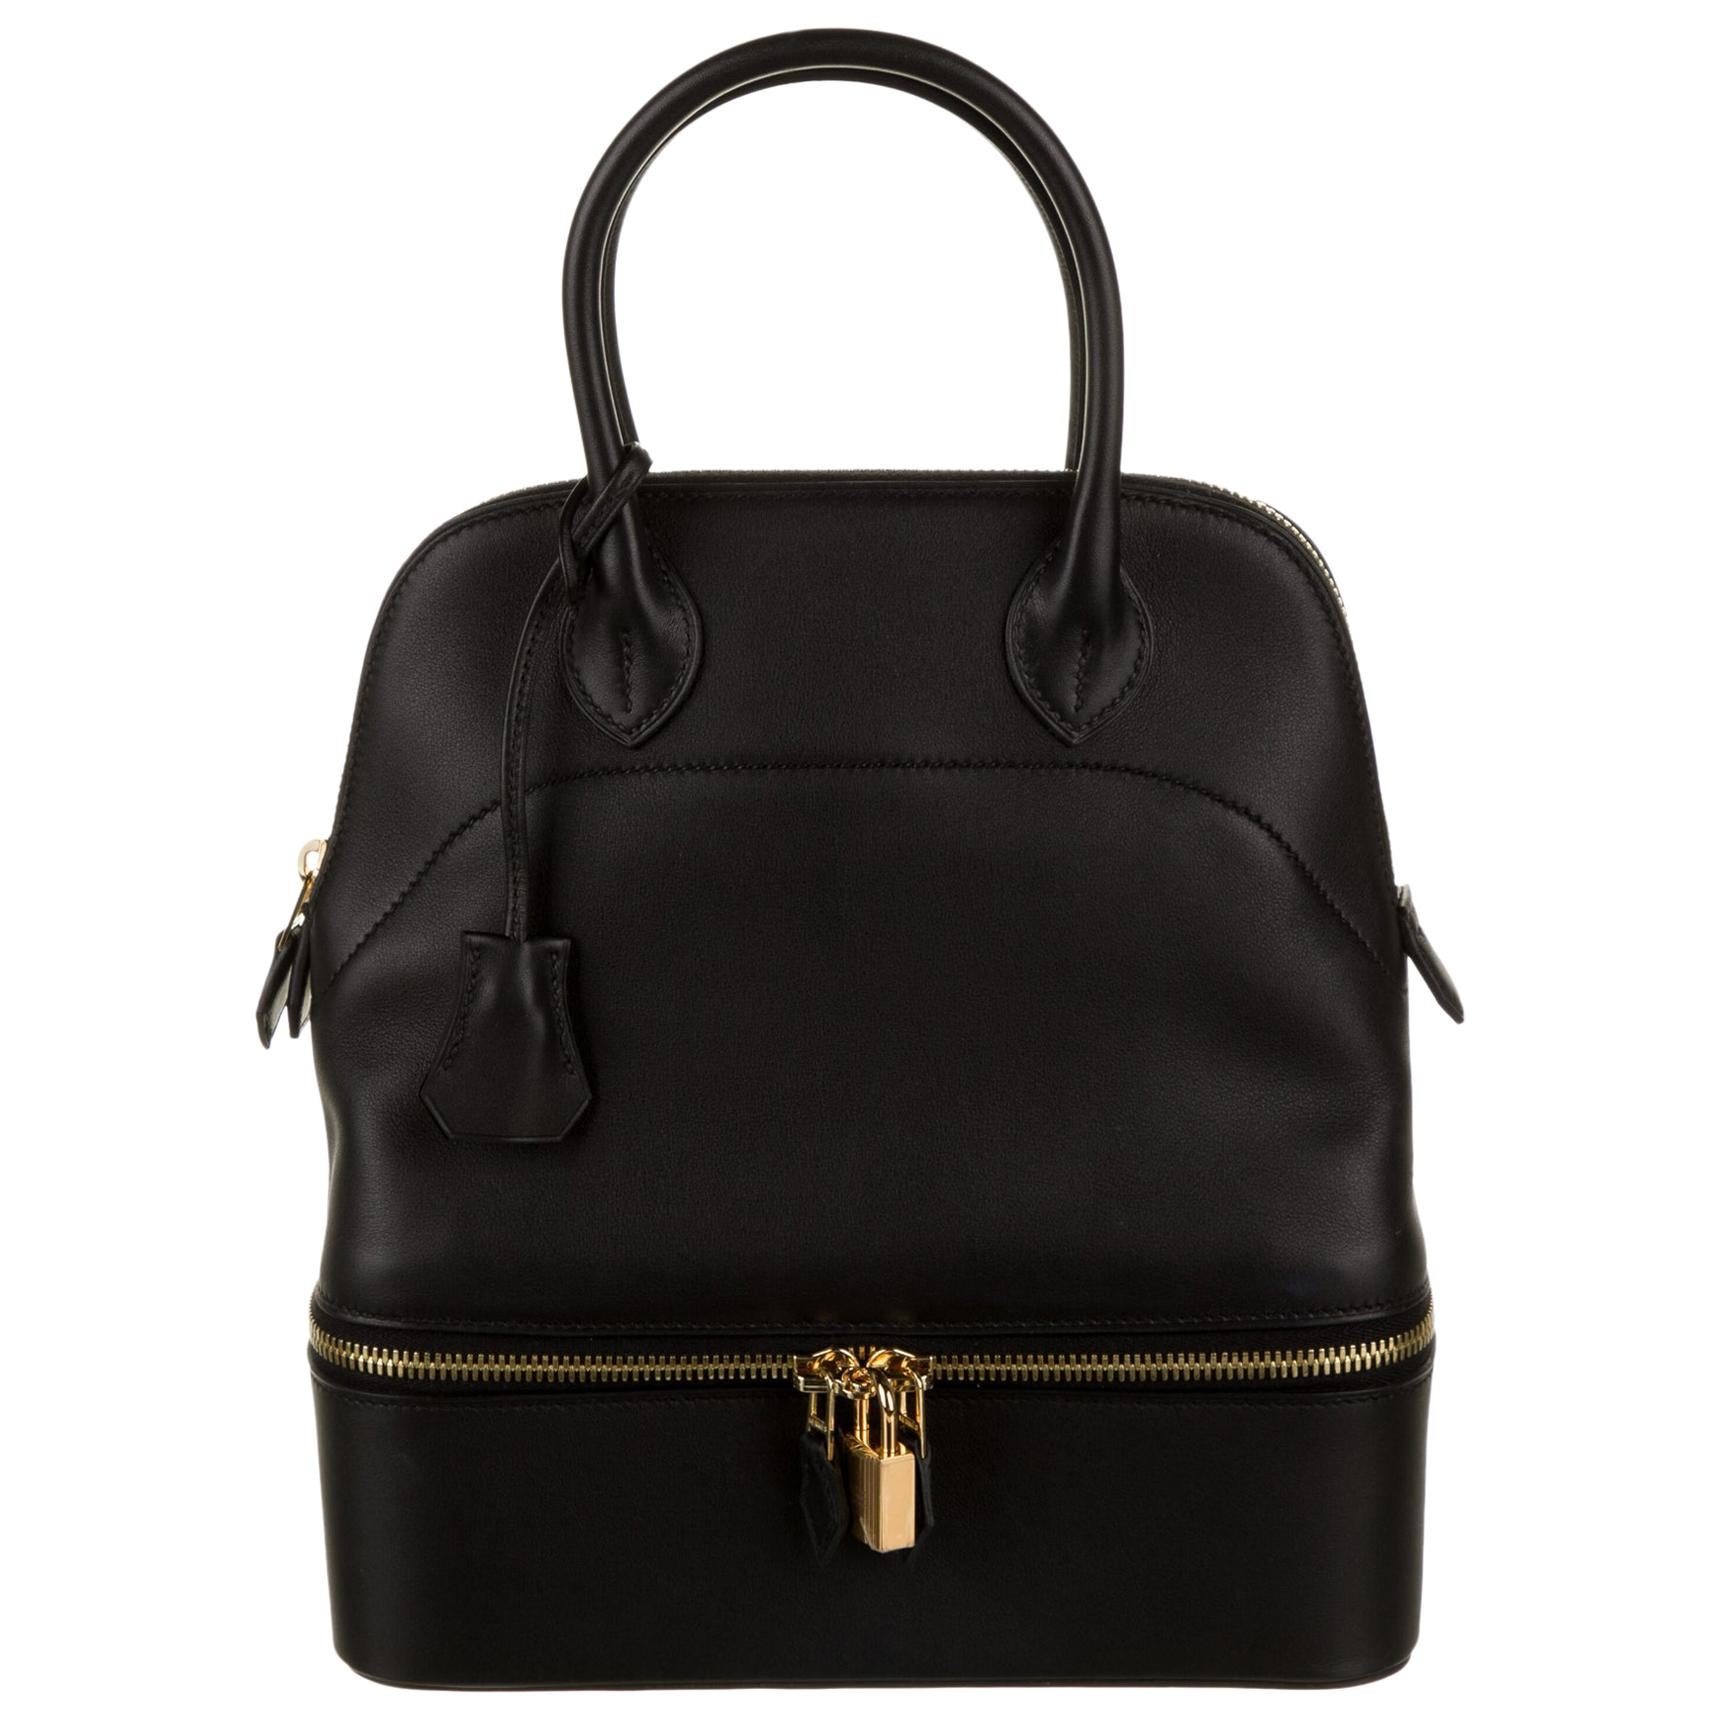 Hermes NEW Black Leather Gold Top Handle Satchel Men's Women's Travel Tote Bag